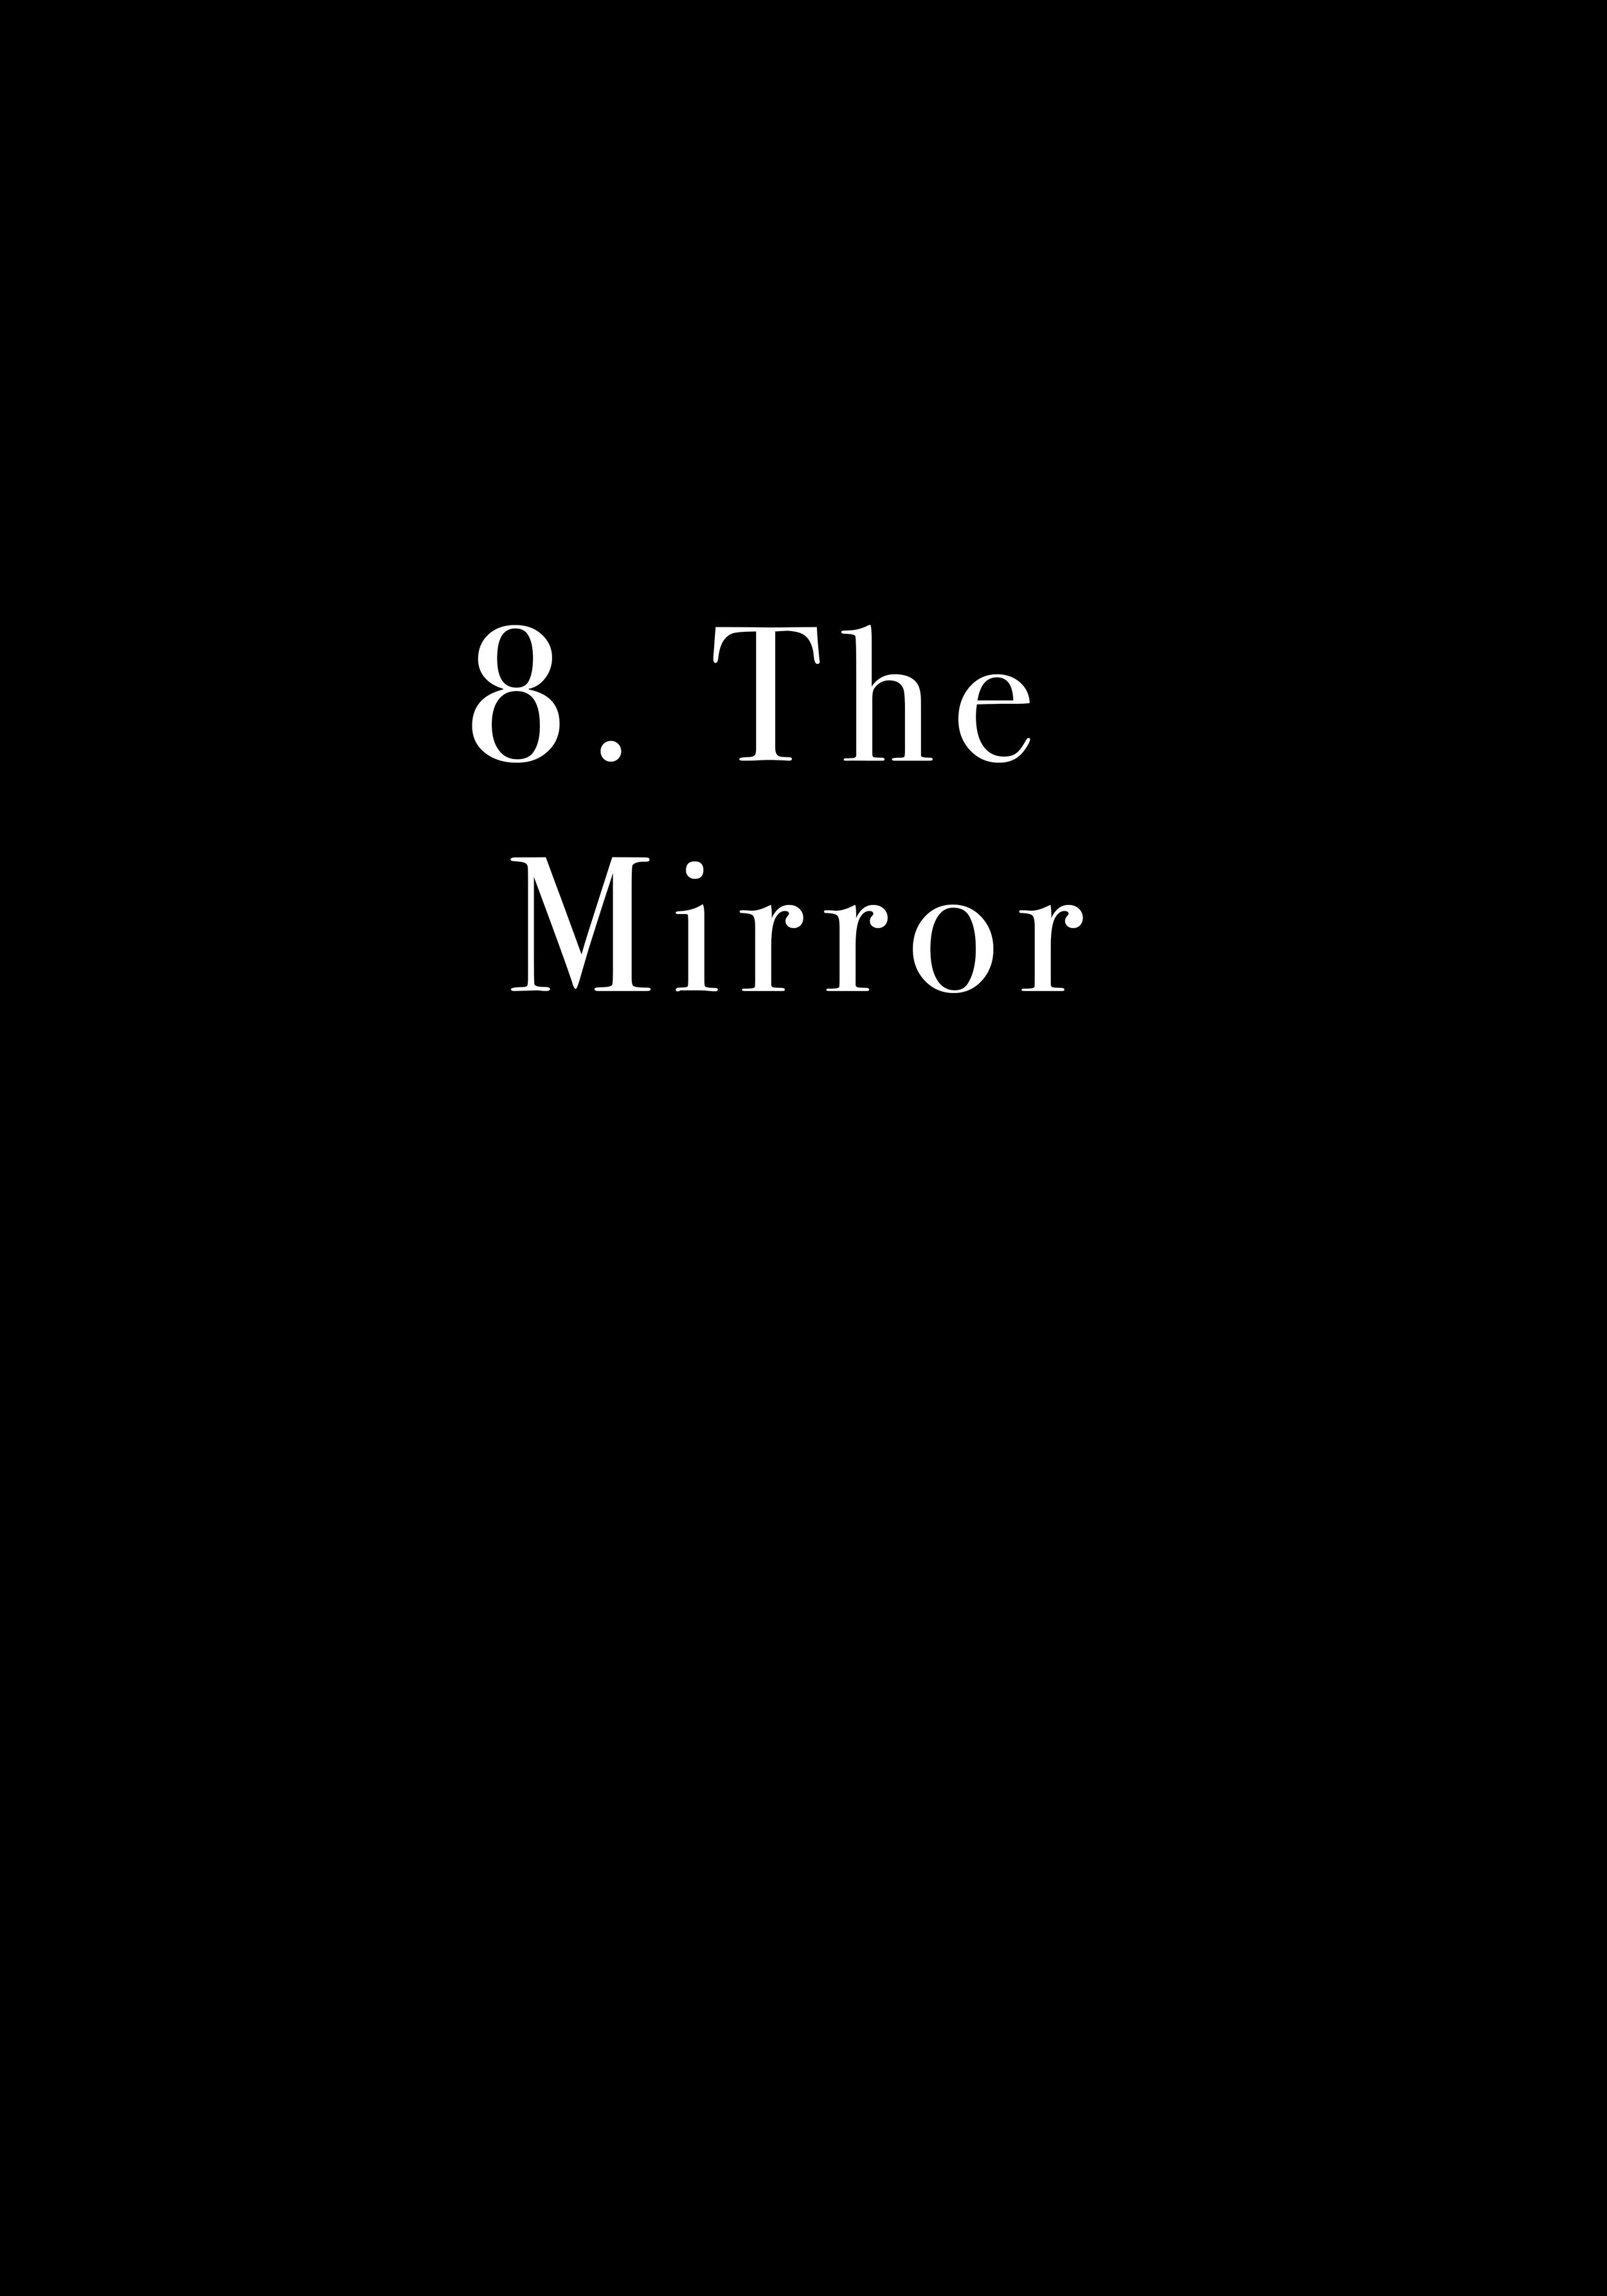 the mirror-1.jpg